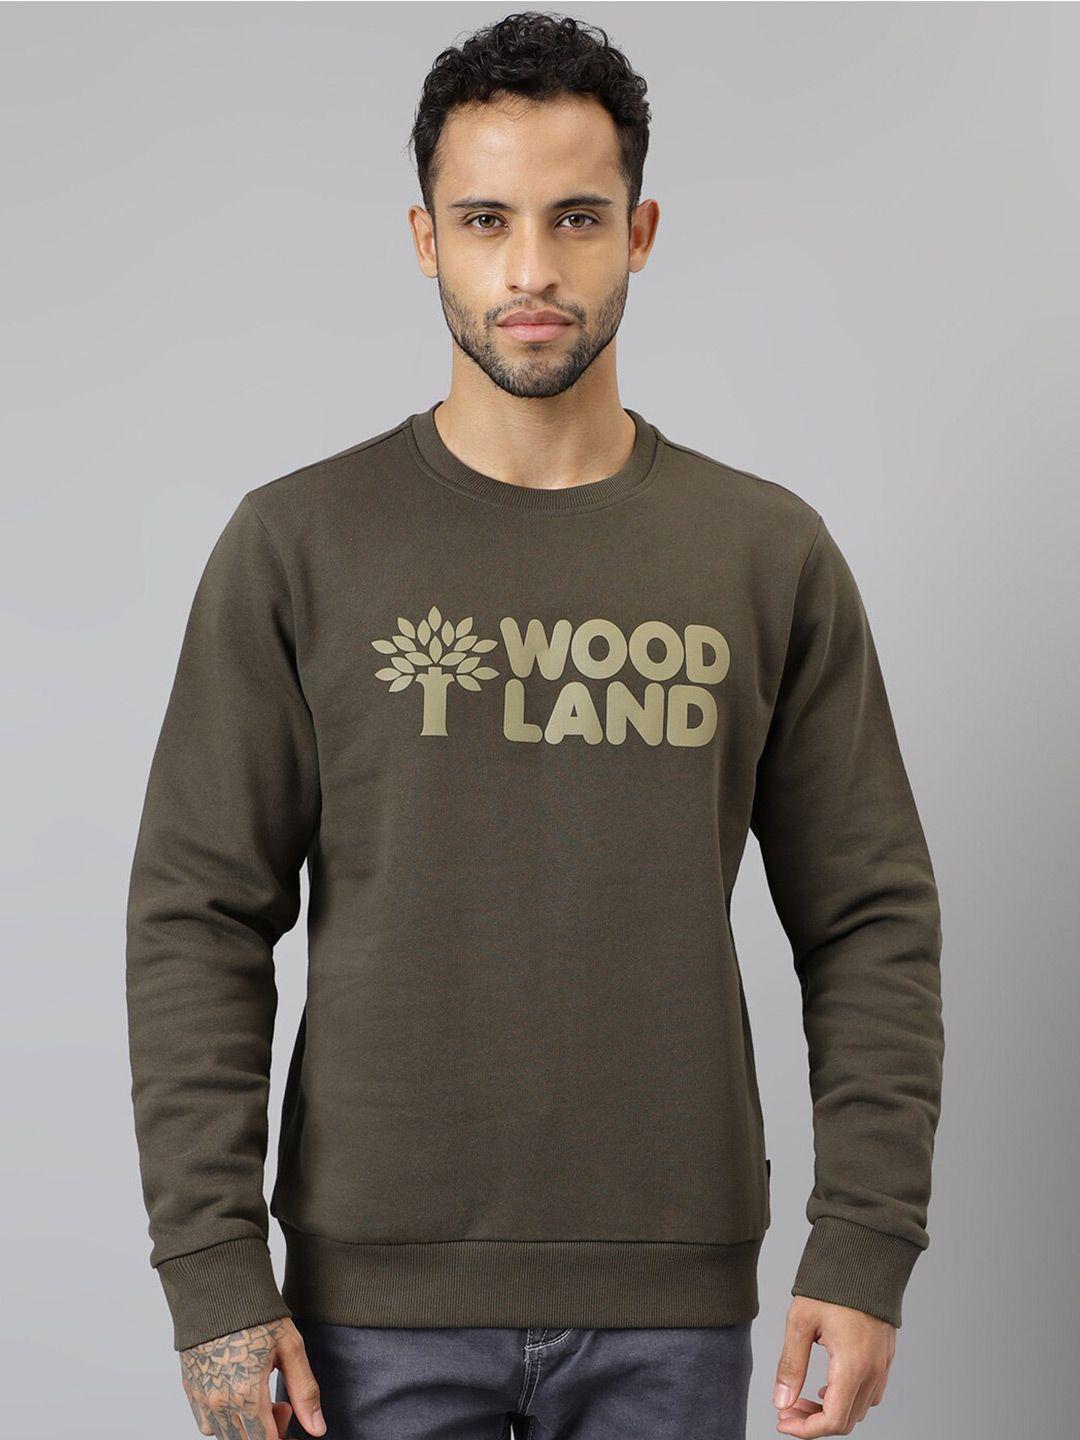 Woodland Typography Printed Pure Cotton Pullover Sweatshirt